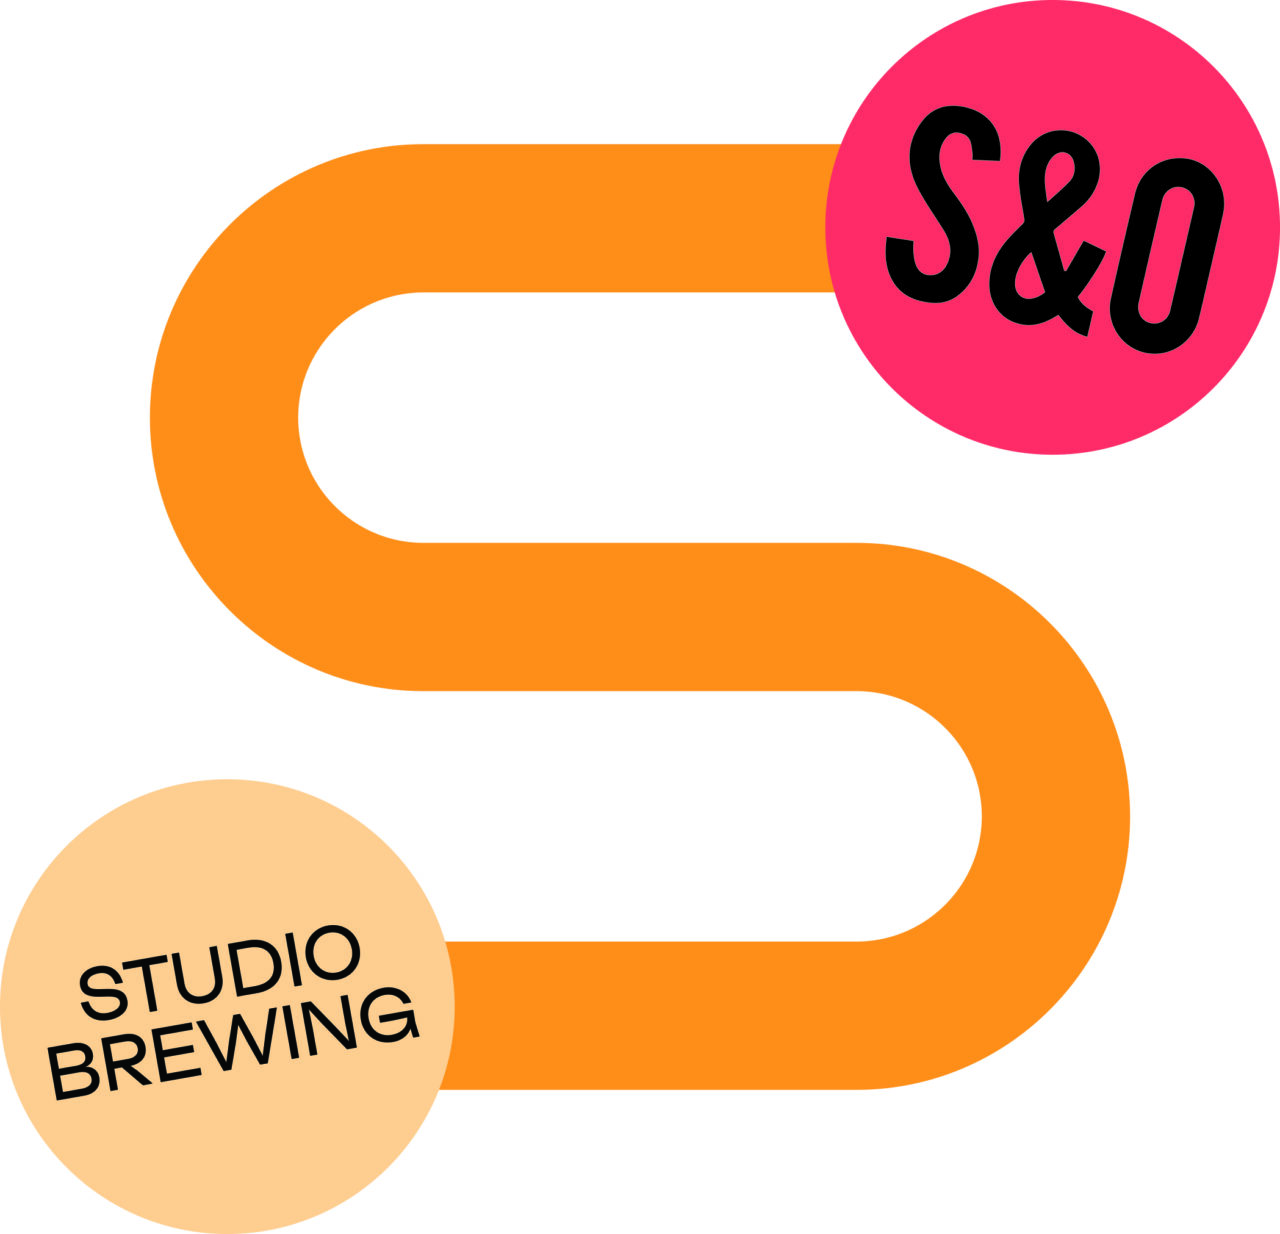 Studio Brewing and Steel & Oak collab logo